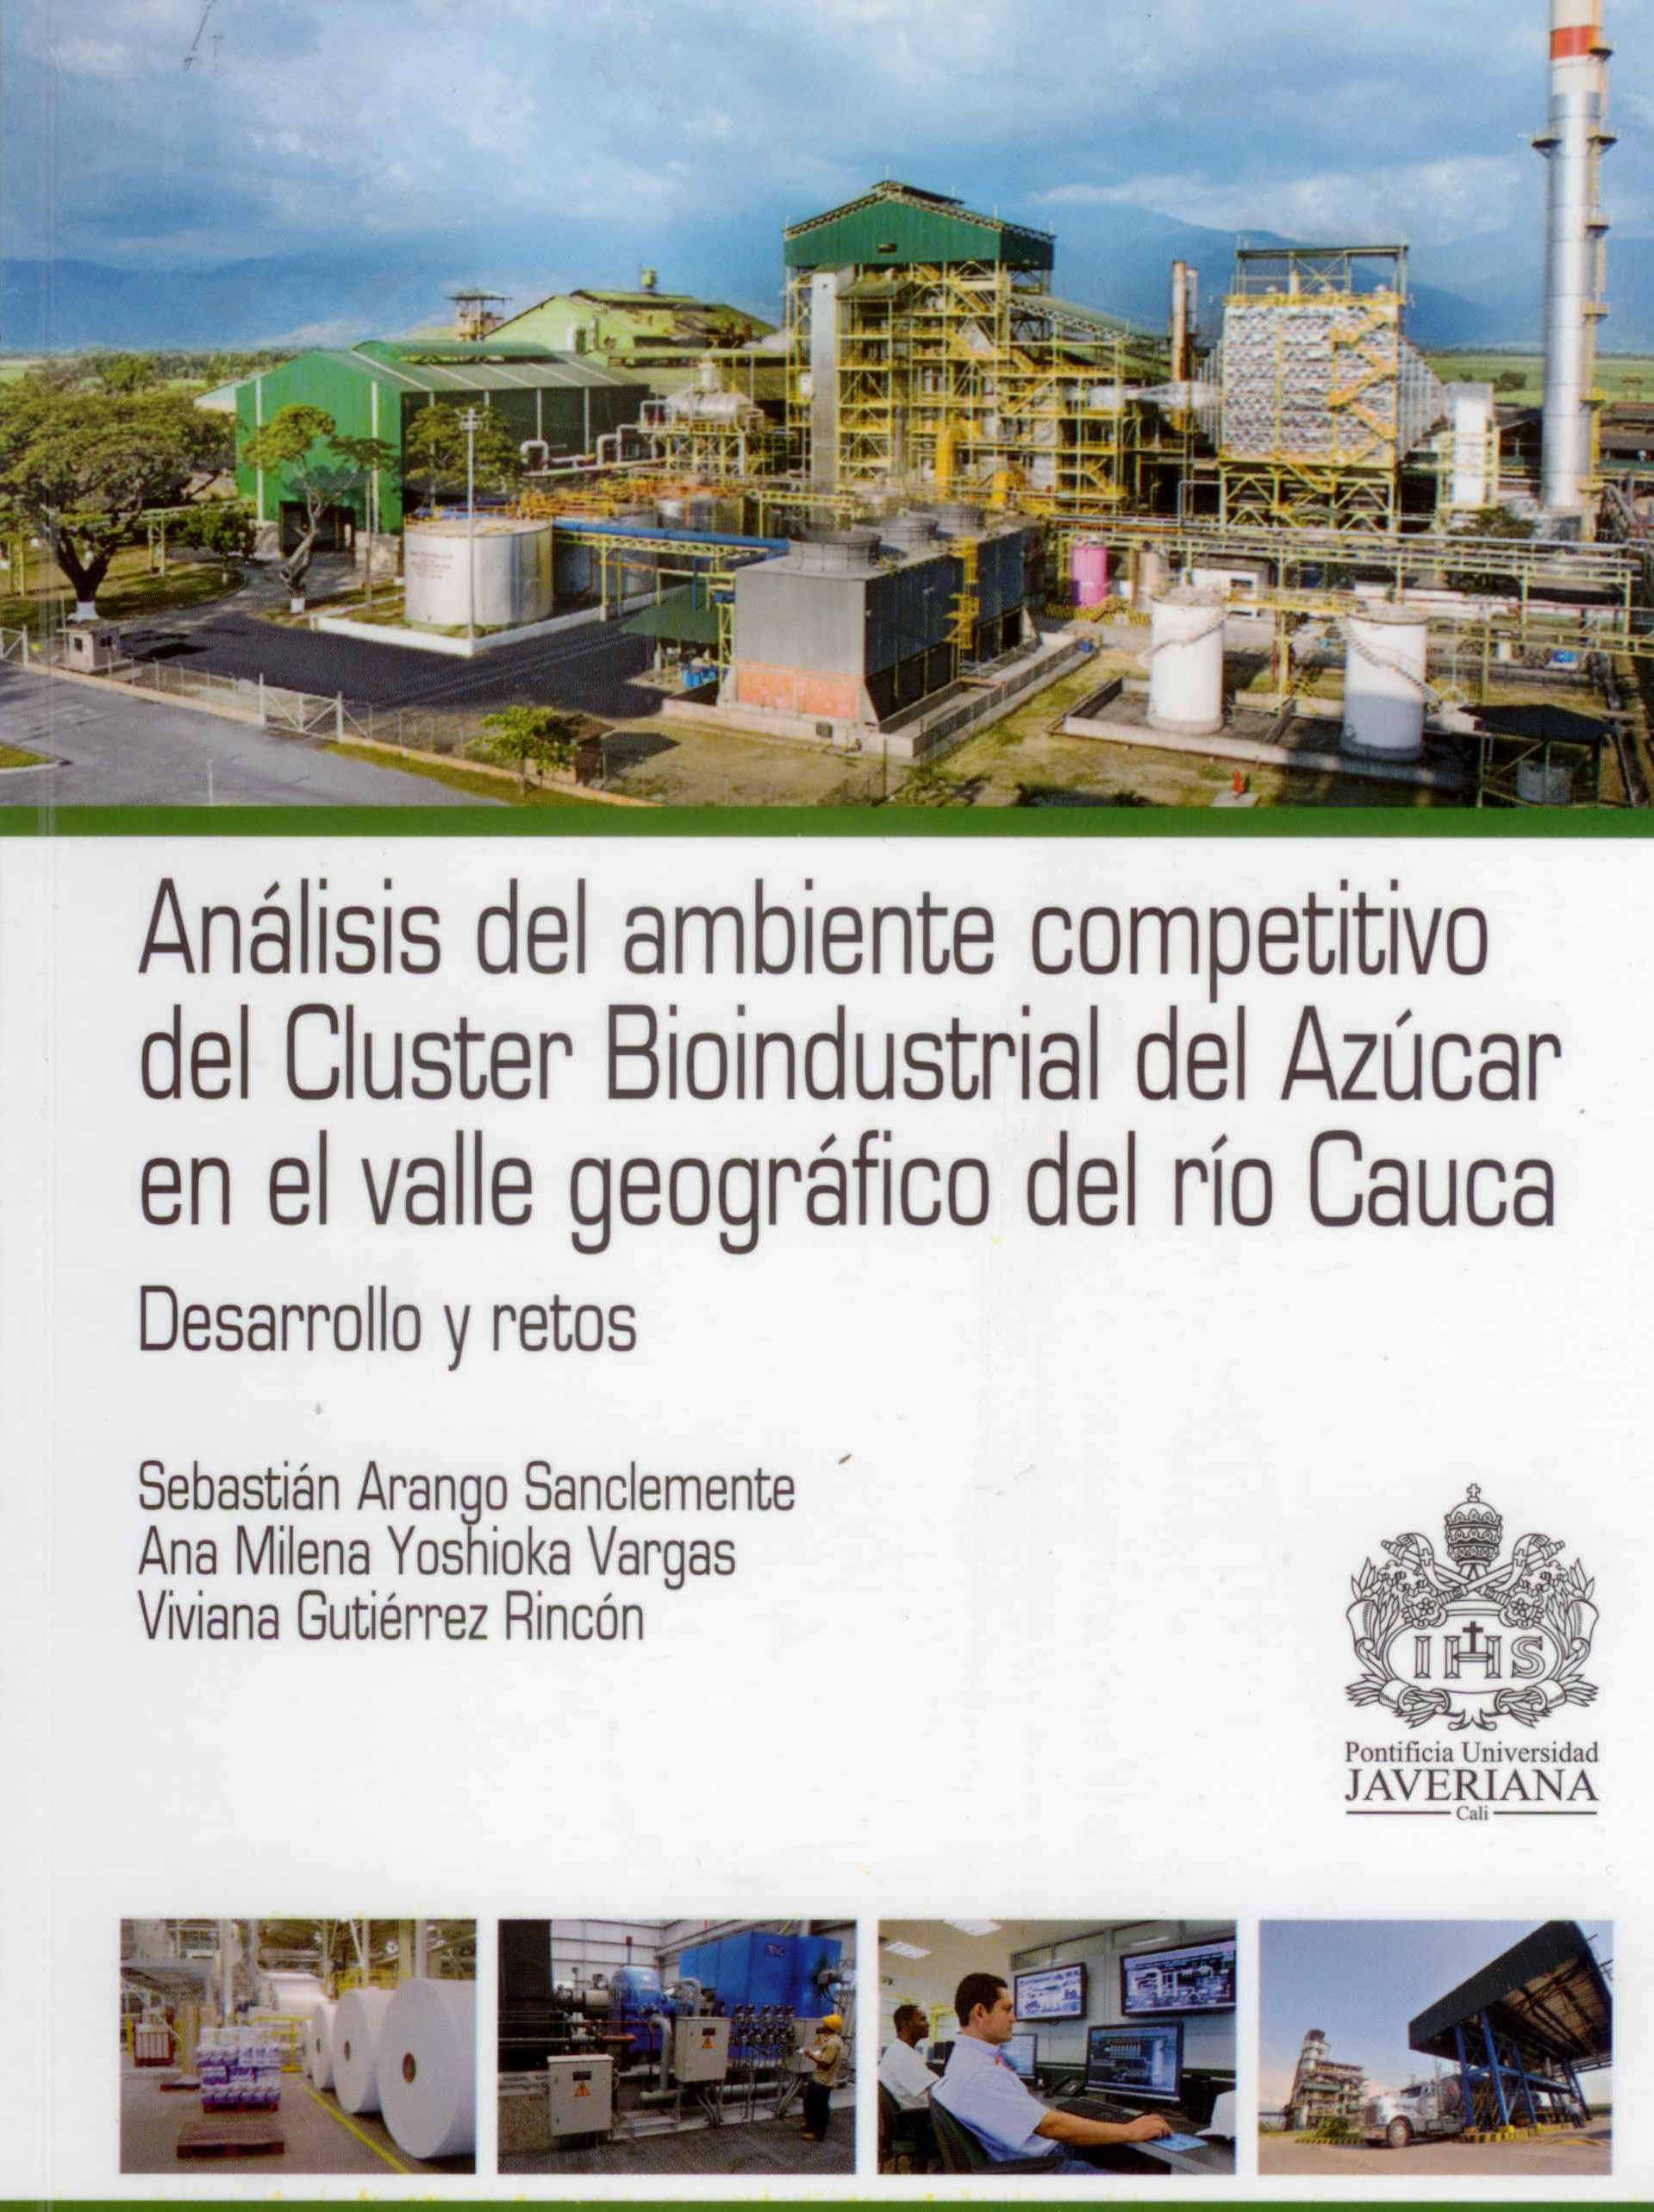 http://www.cenicana.org/investigacion/seica/imagenes_libros/2012/caratula_analisis_ambiente_competitivo.jpg